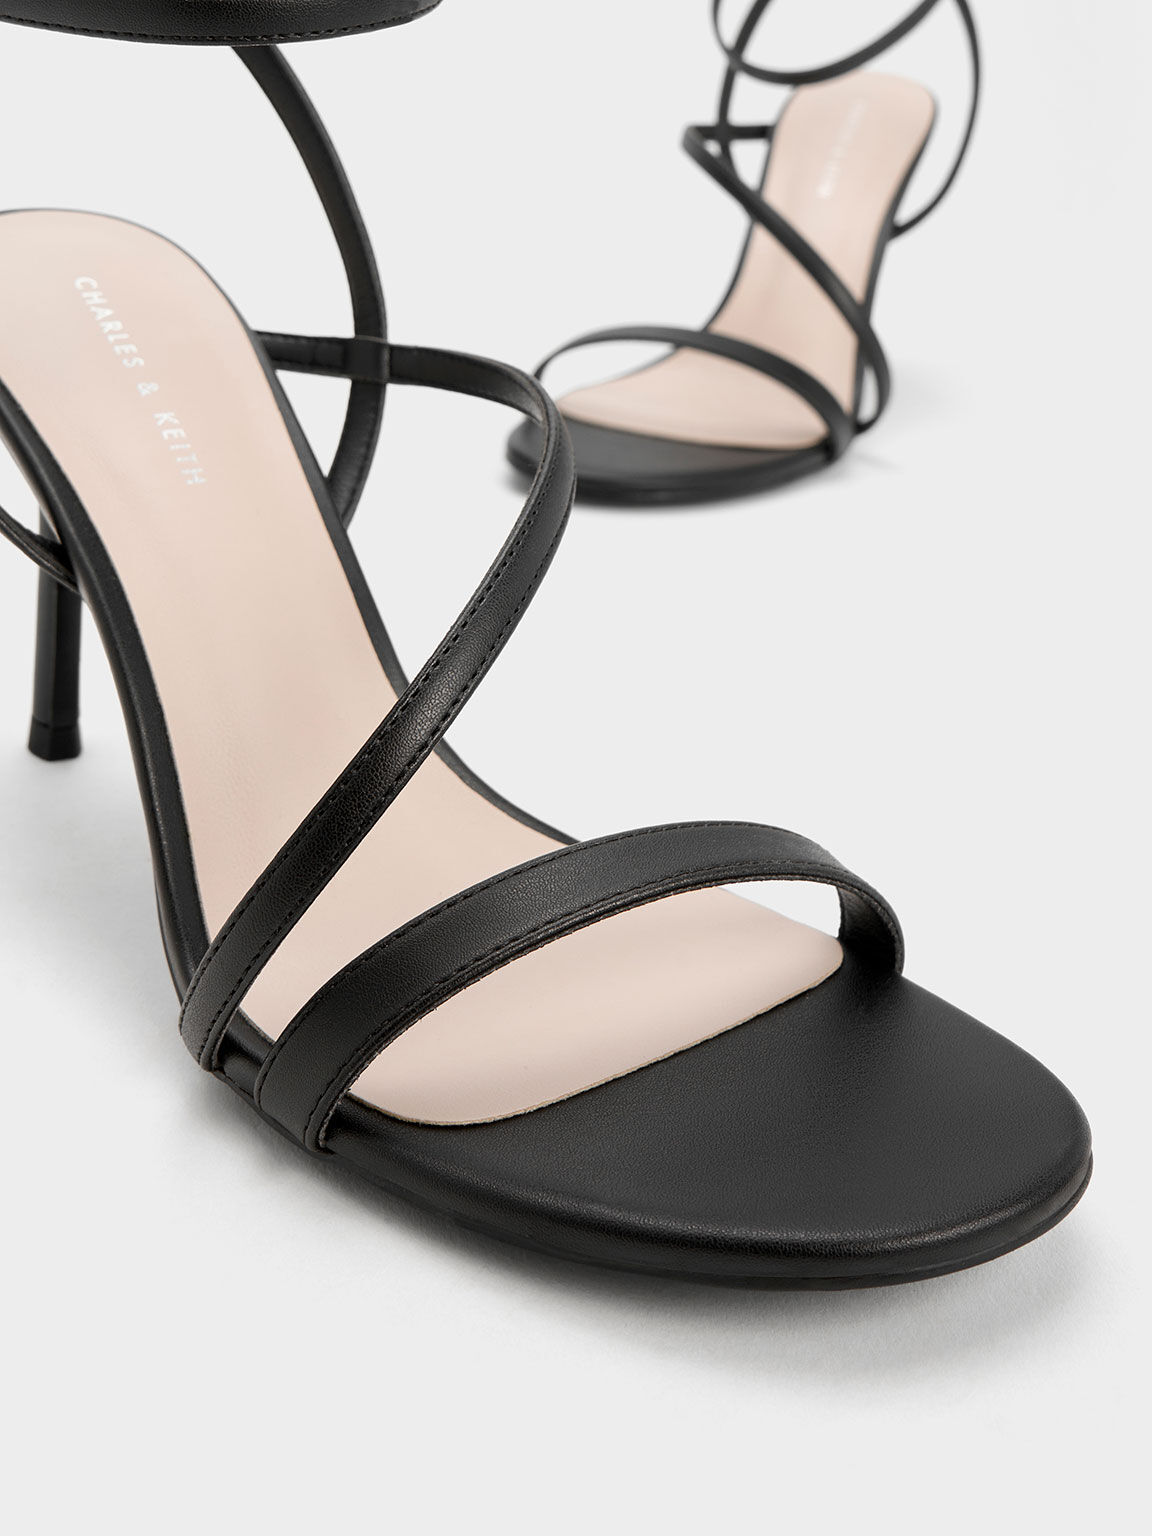 Zara | Shoes | Zara Strappy Black Heels | Poshmark